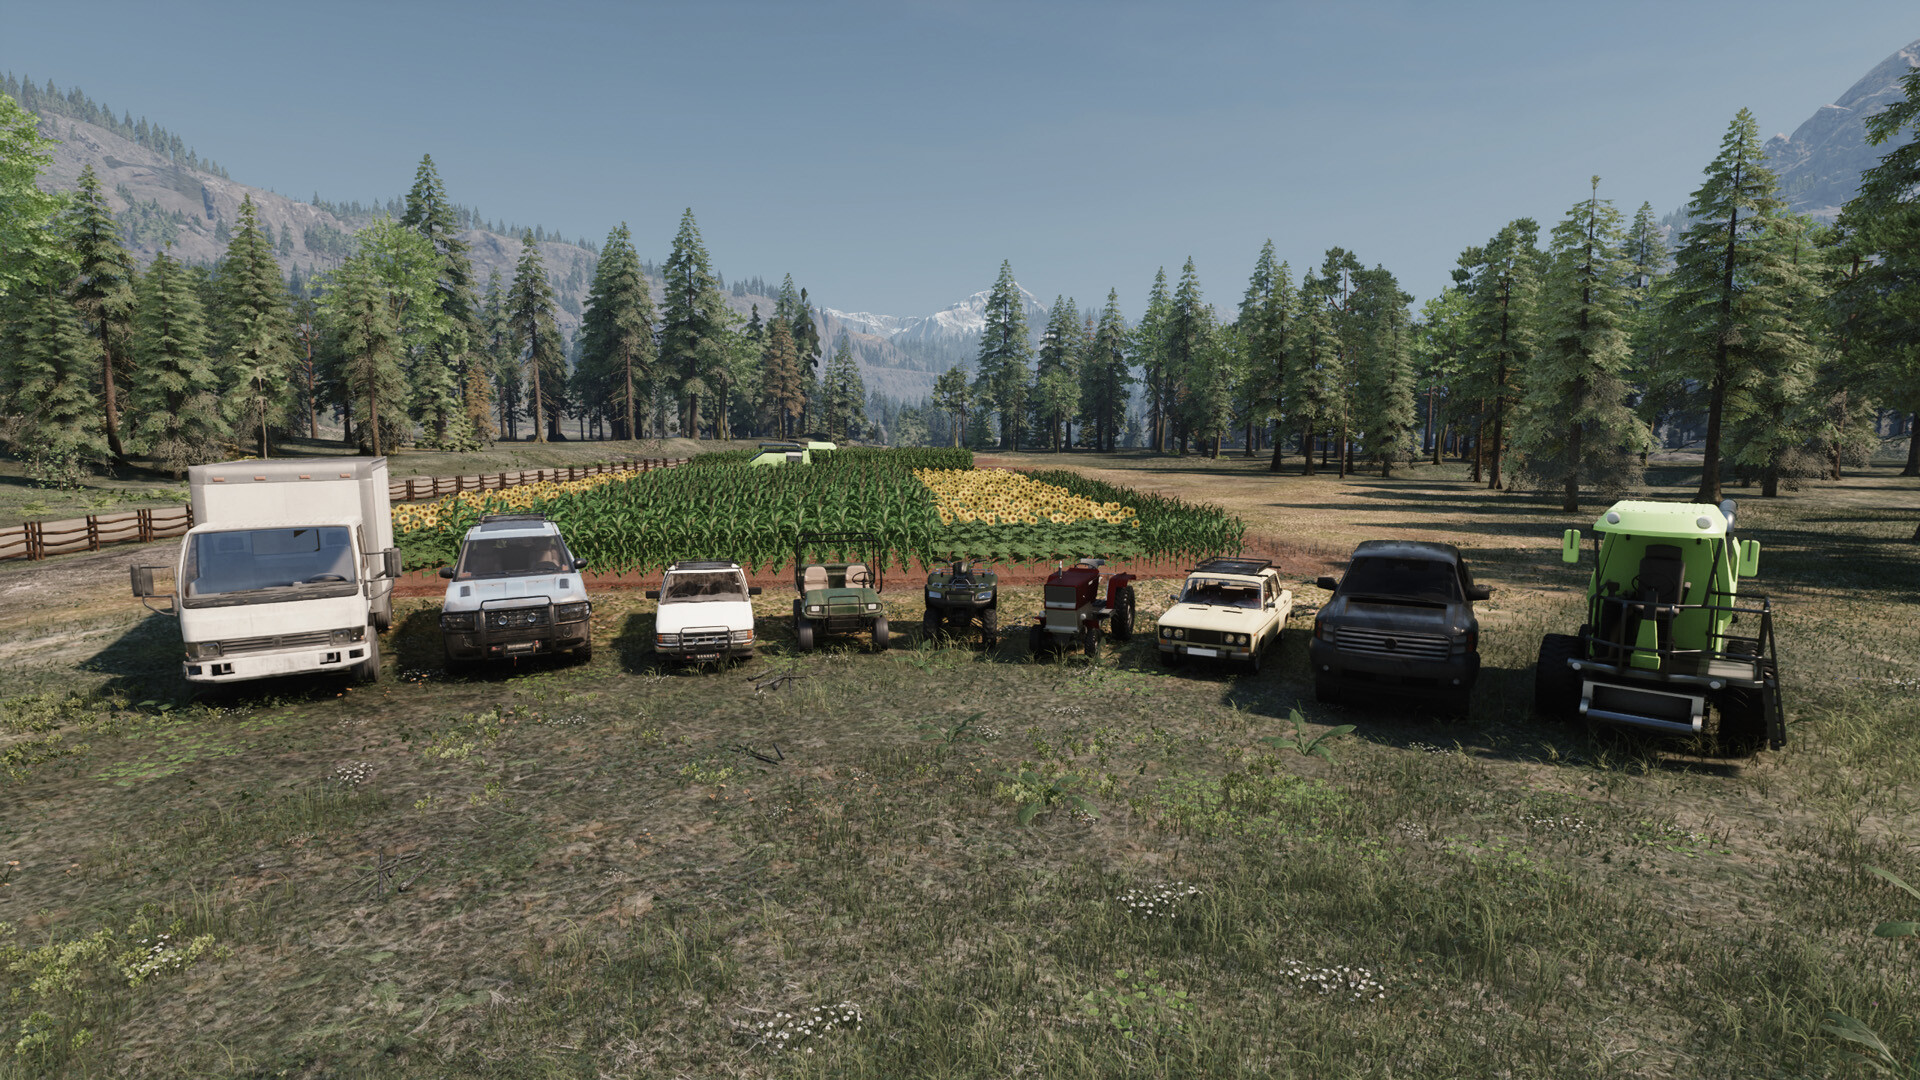 Ranch Simulator - Build, Farm, Hunt. - Day 3 